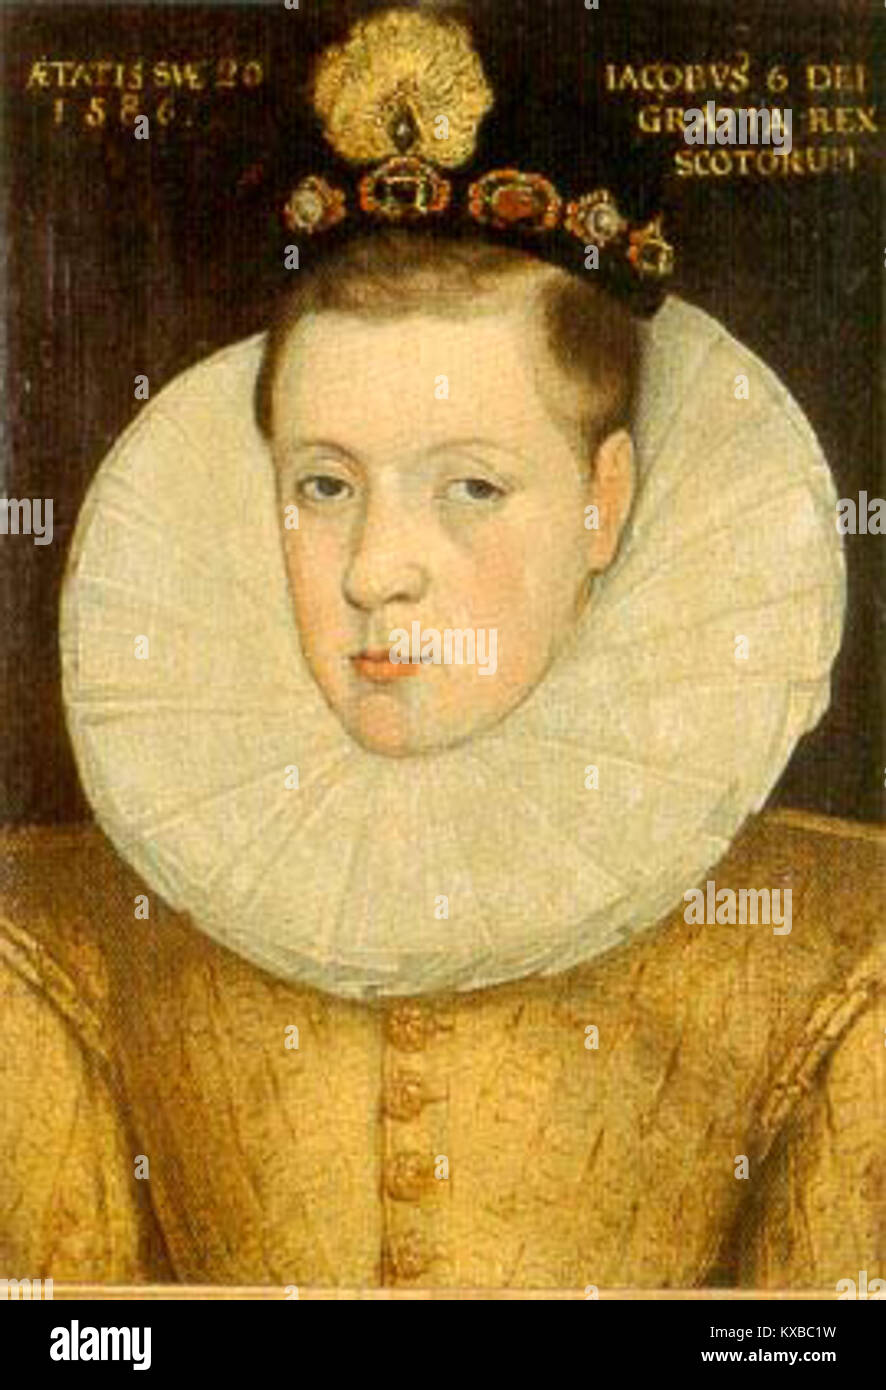 James VI of Scotland aged 20, 1586. Stock Photo